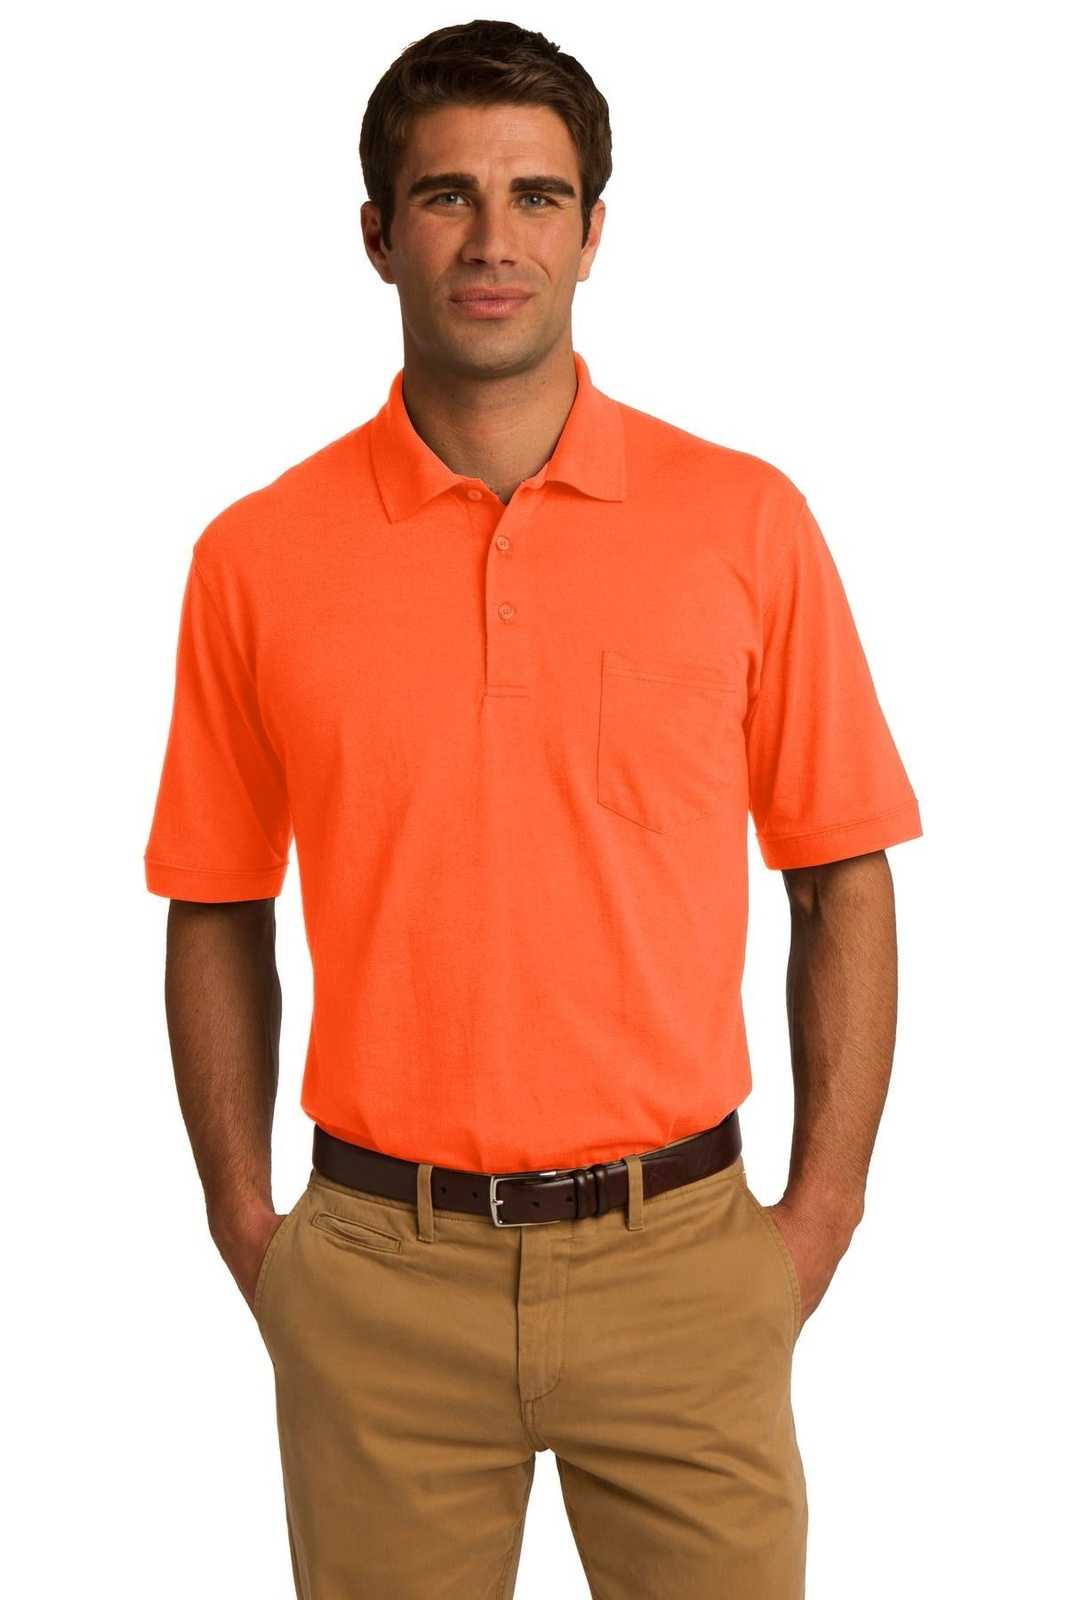 Port &amp; Company KP55P Core Blend Jersey Knit Pocket Polo - Safety Orange - HIT a Double - 1